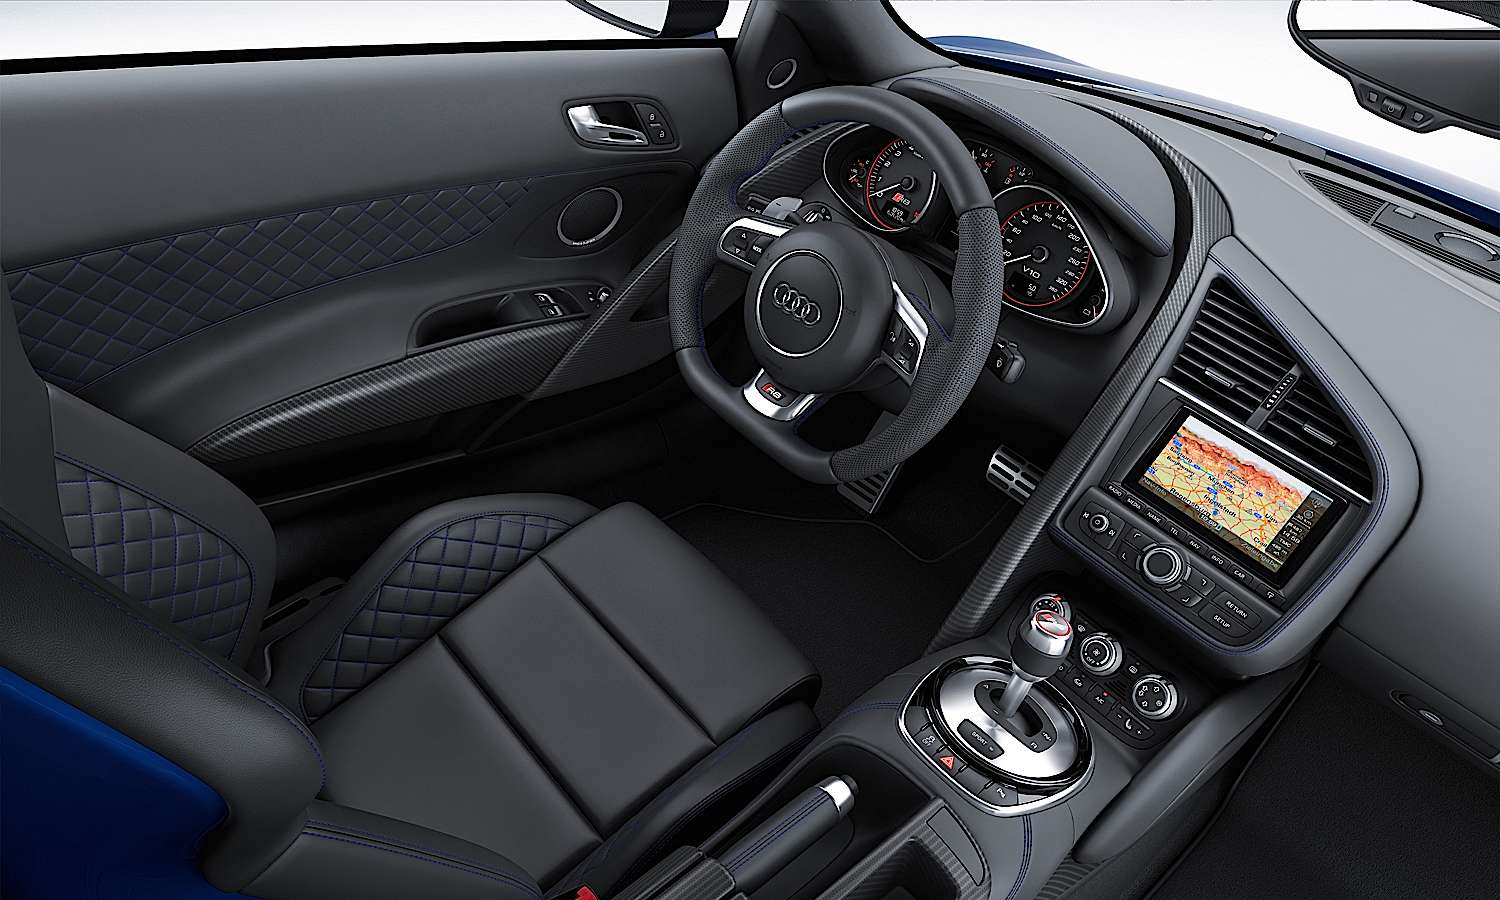 The Audi R8 LMX Interior